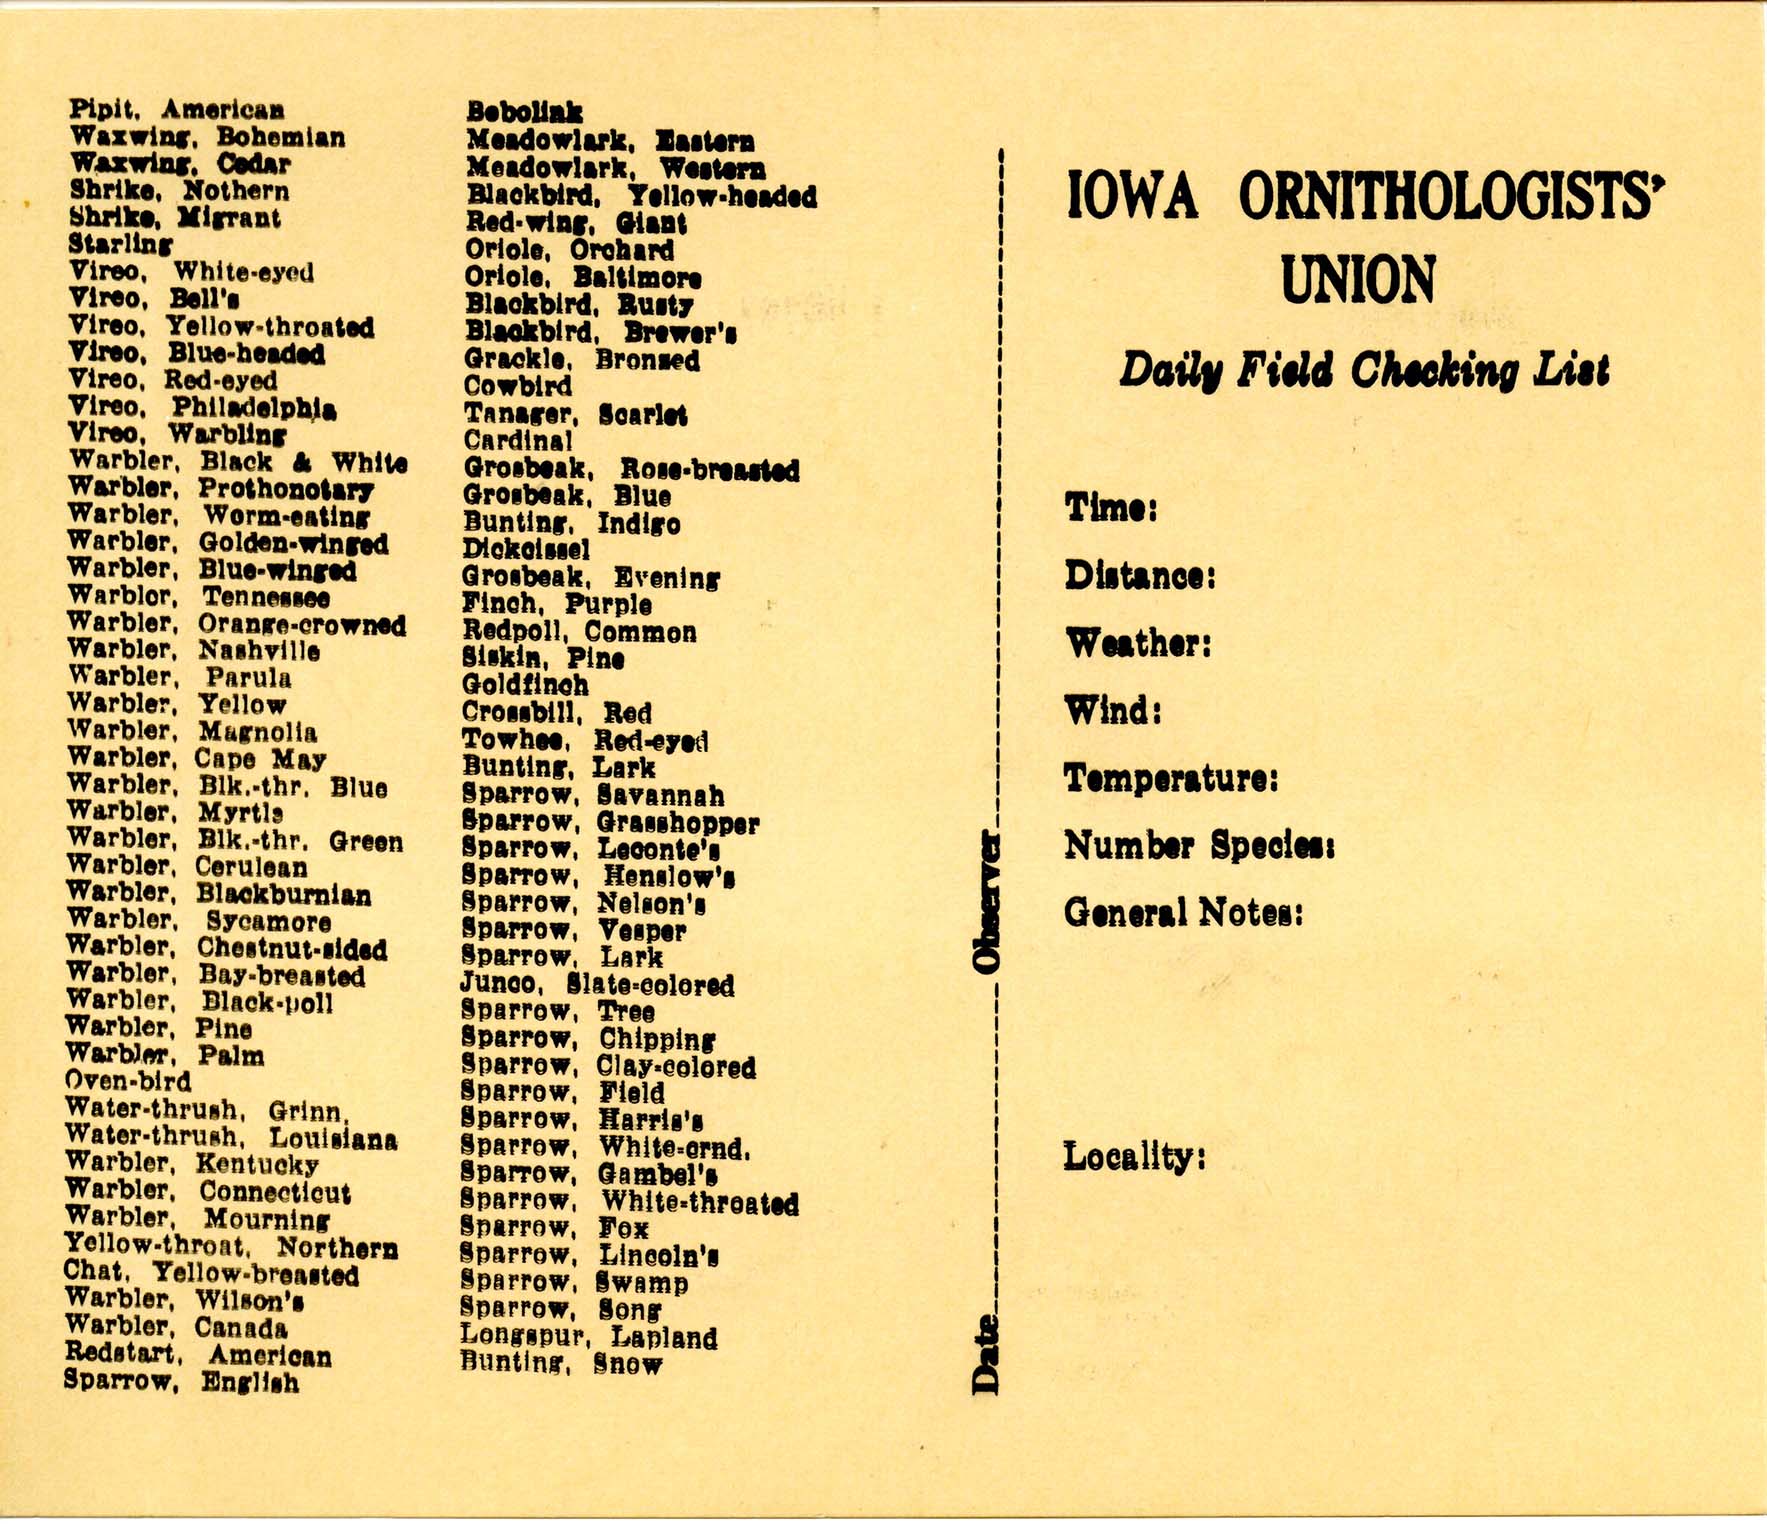 Iowa Ornithologists' Union daily field checking list